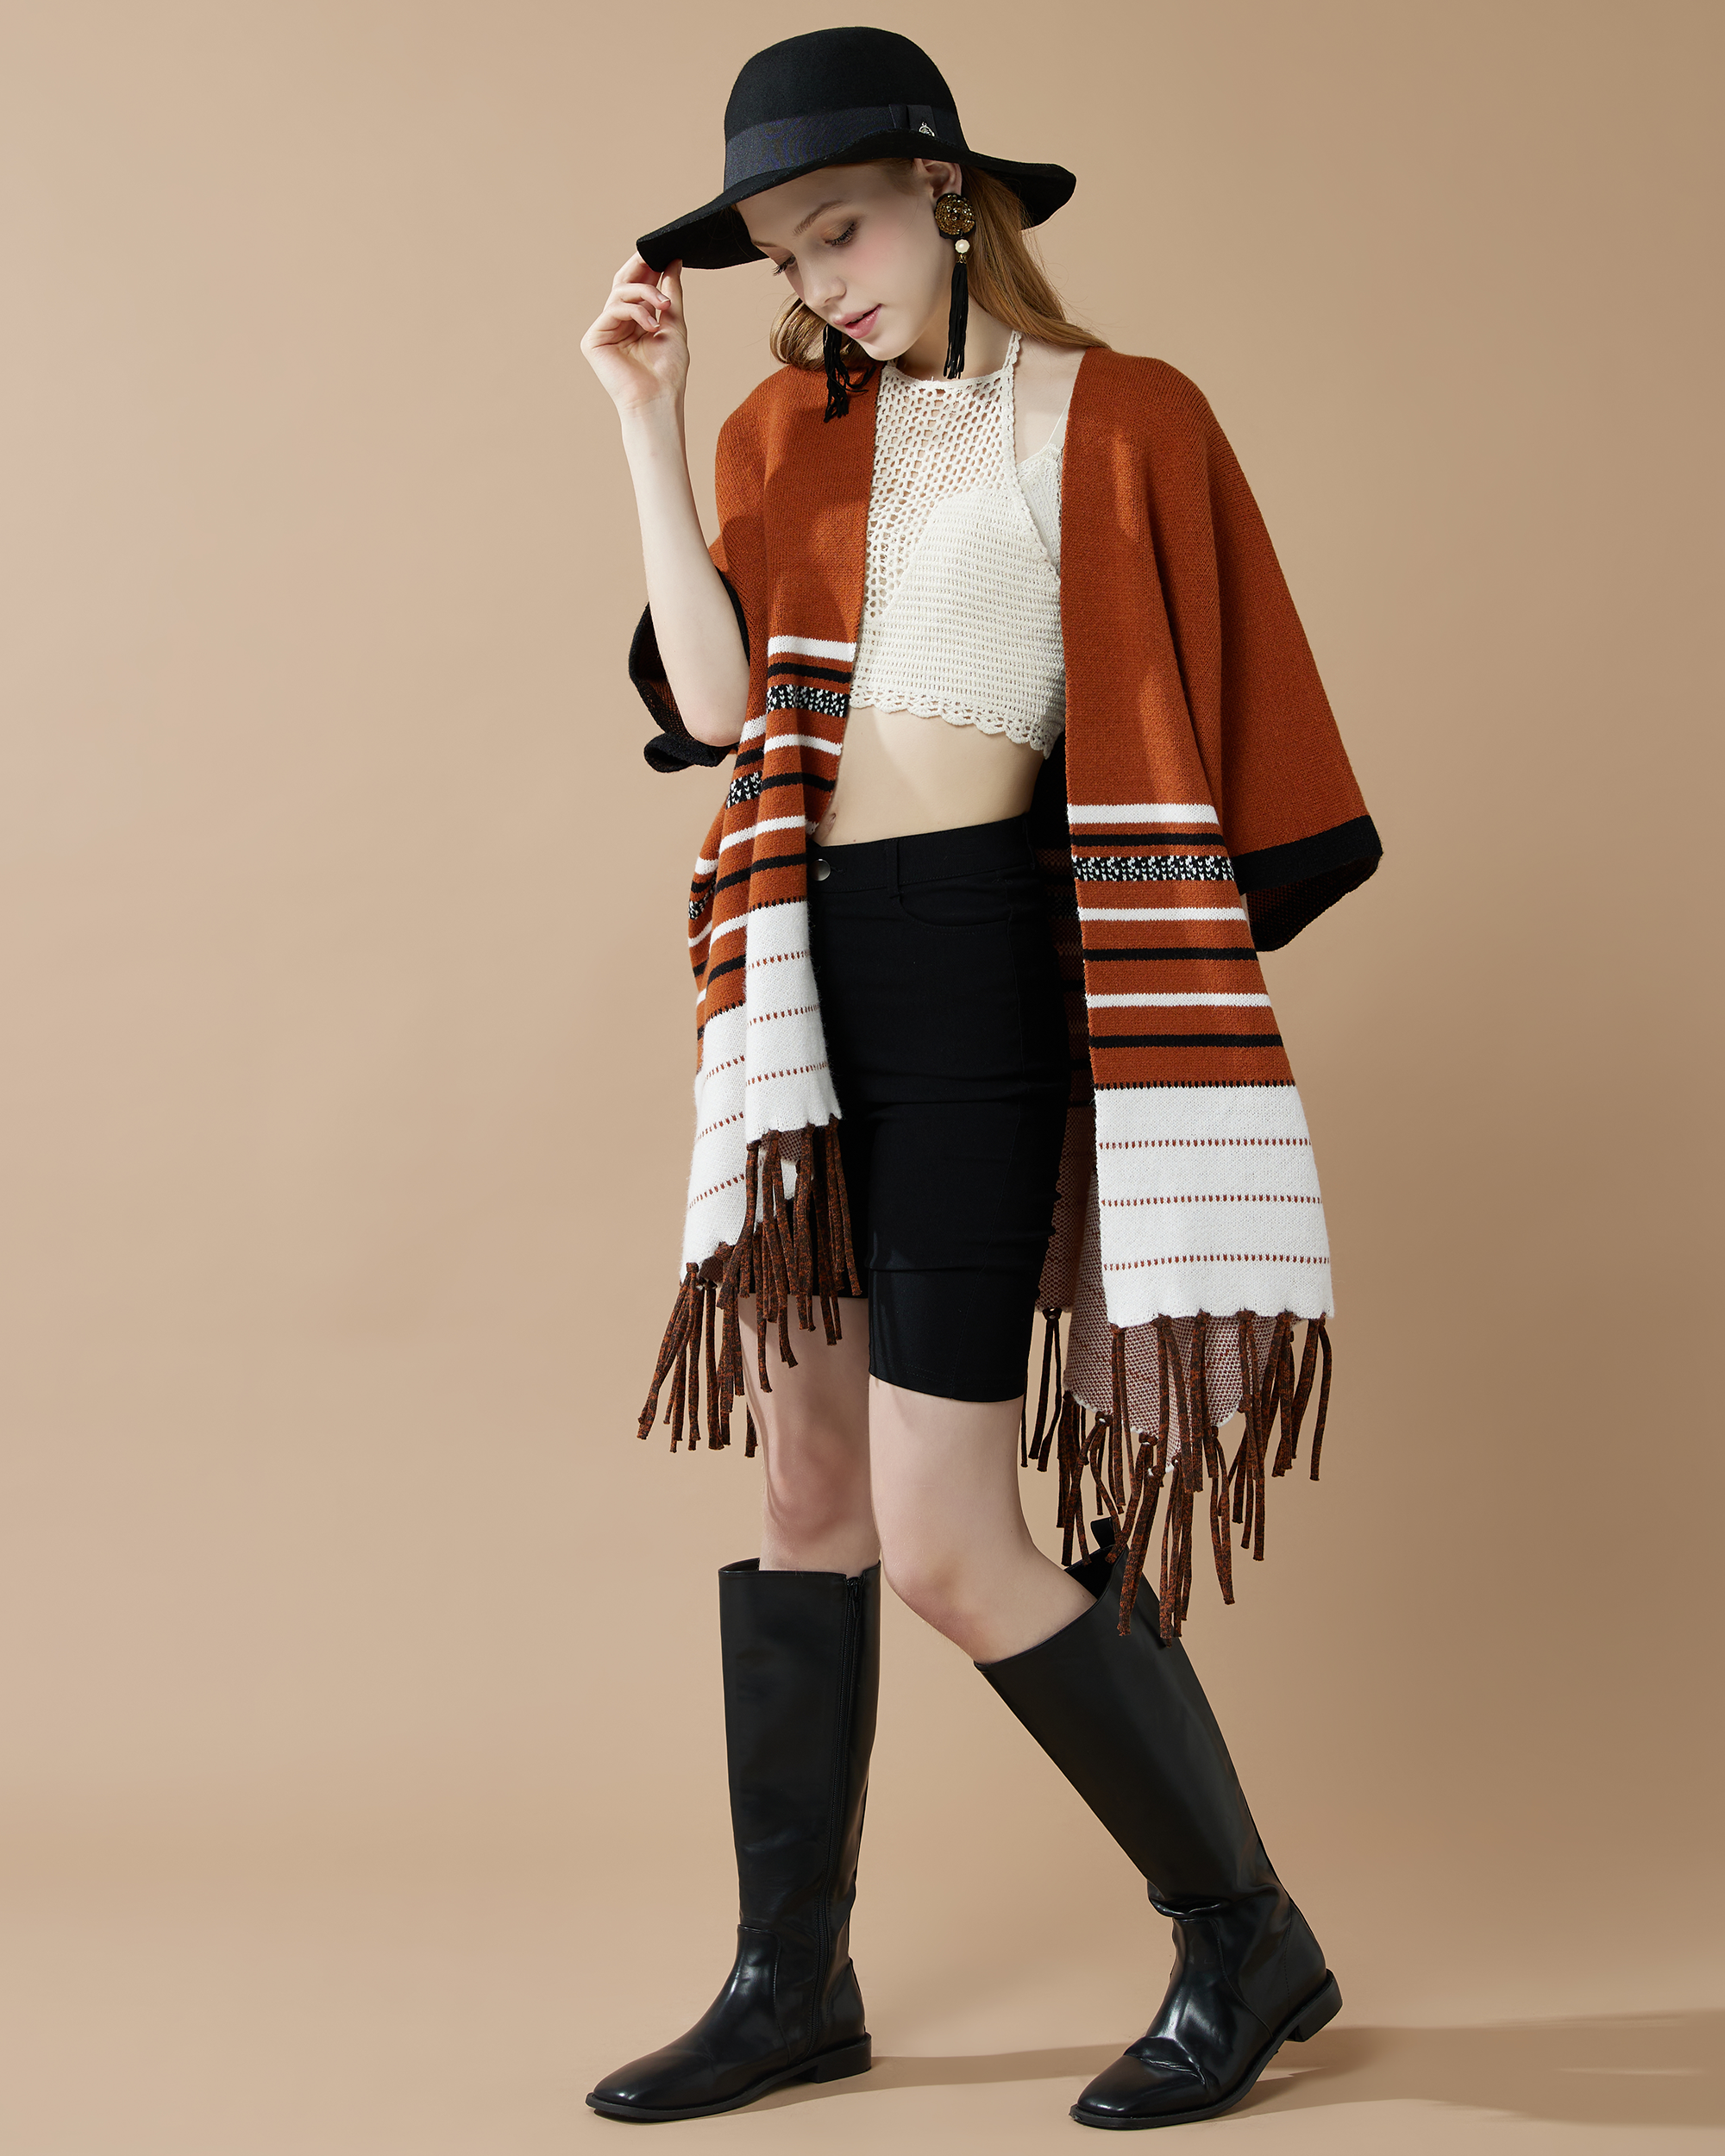 Western Striped Fringed Ruana Poncho Sweater Cardigan - Rust